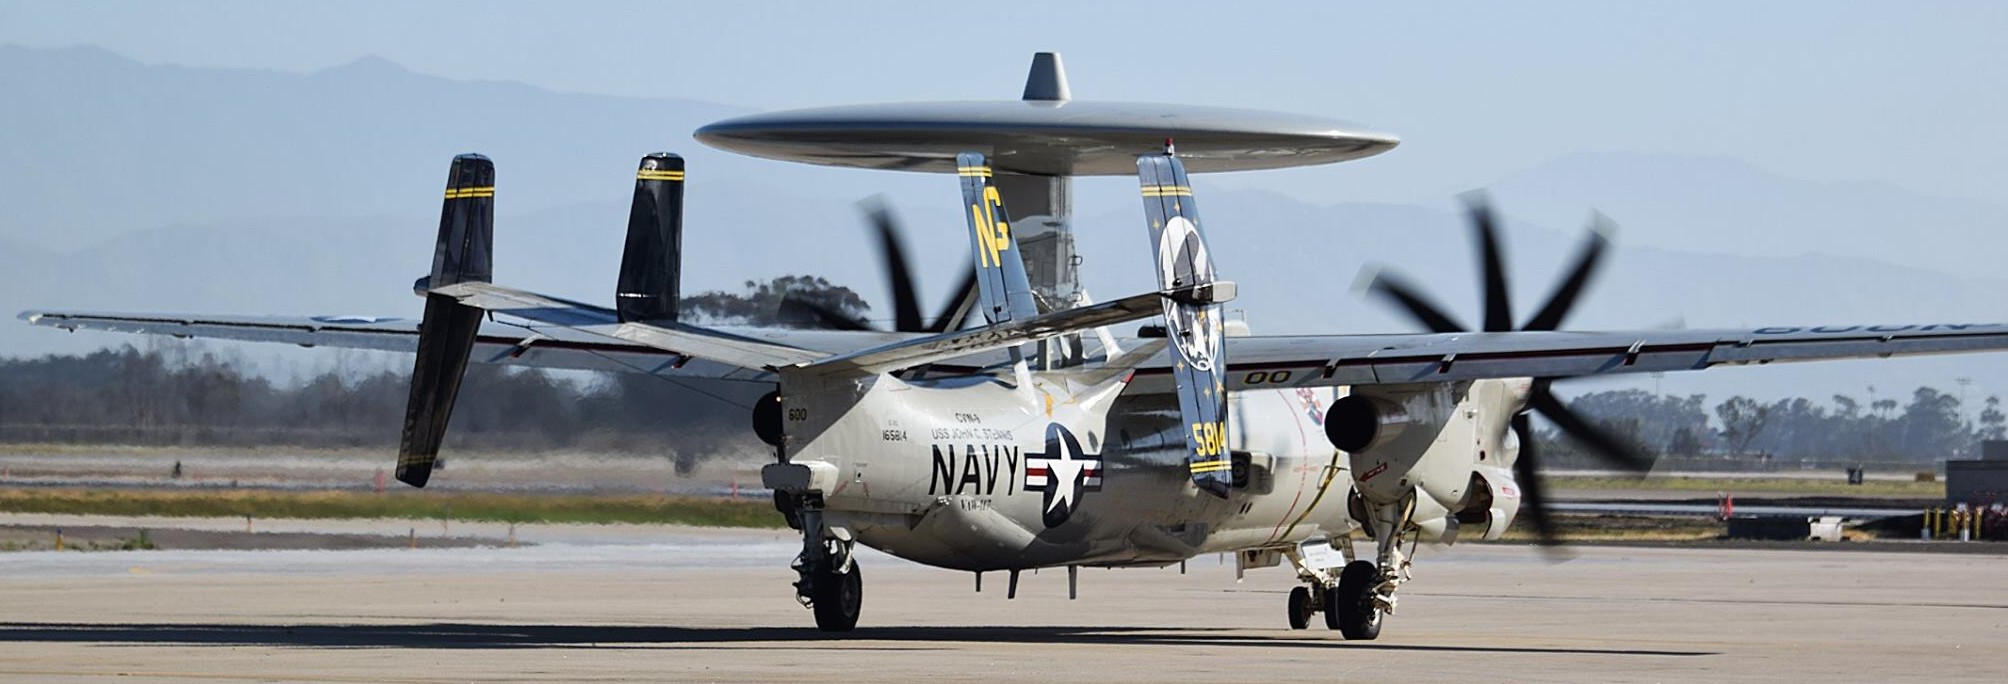 vaw-117 wallbangers carrier airborne early warning squadron navy e-2c hawkeye naval base ventura county point mugu california 55